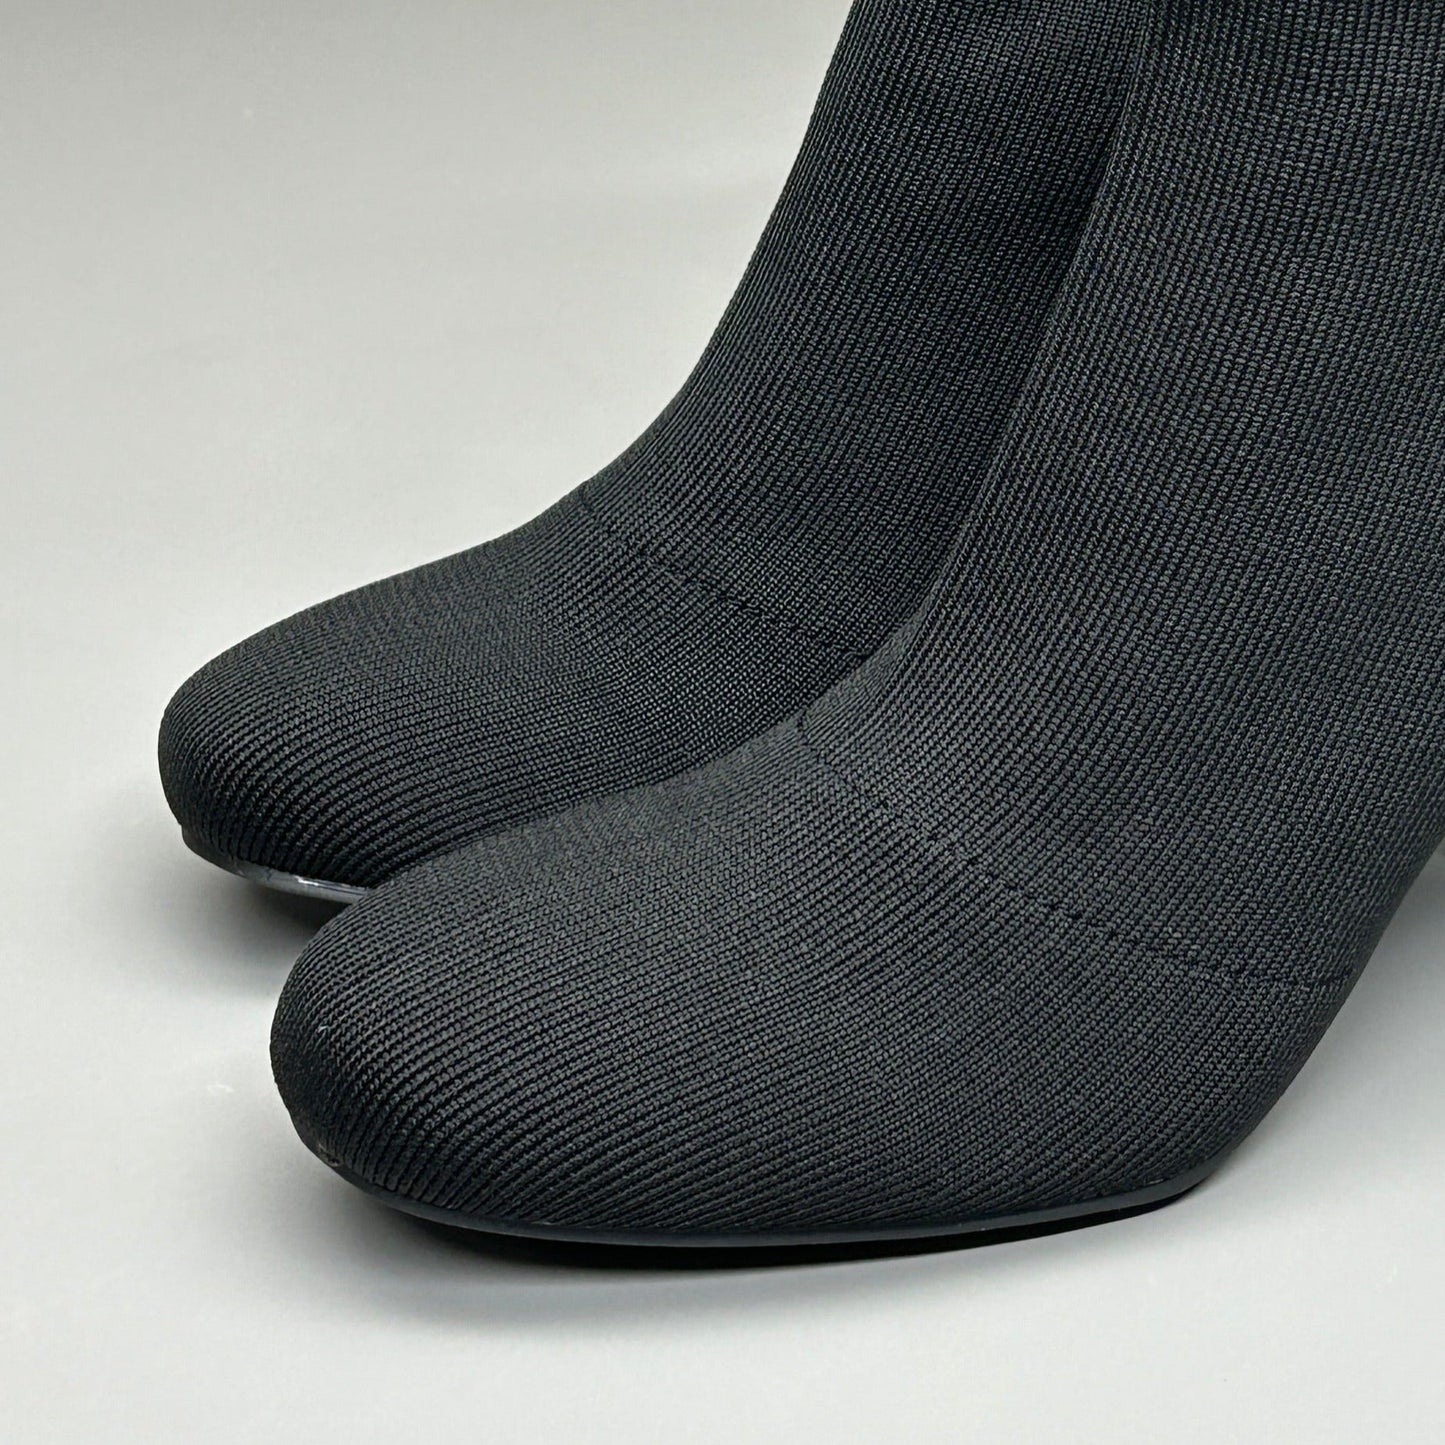 MIA Erika Fly Knit Booties Dress Boots Black 2” Heel Sz 6.5 GS7553115Y (New)